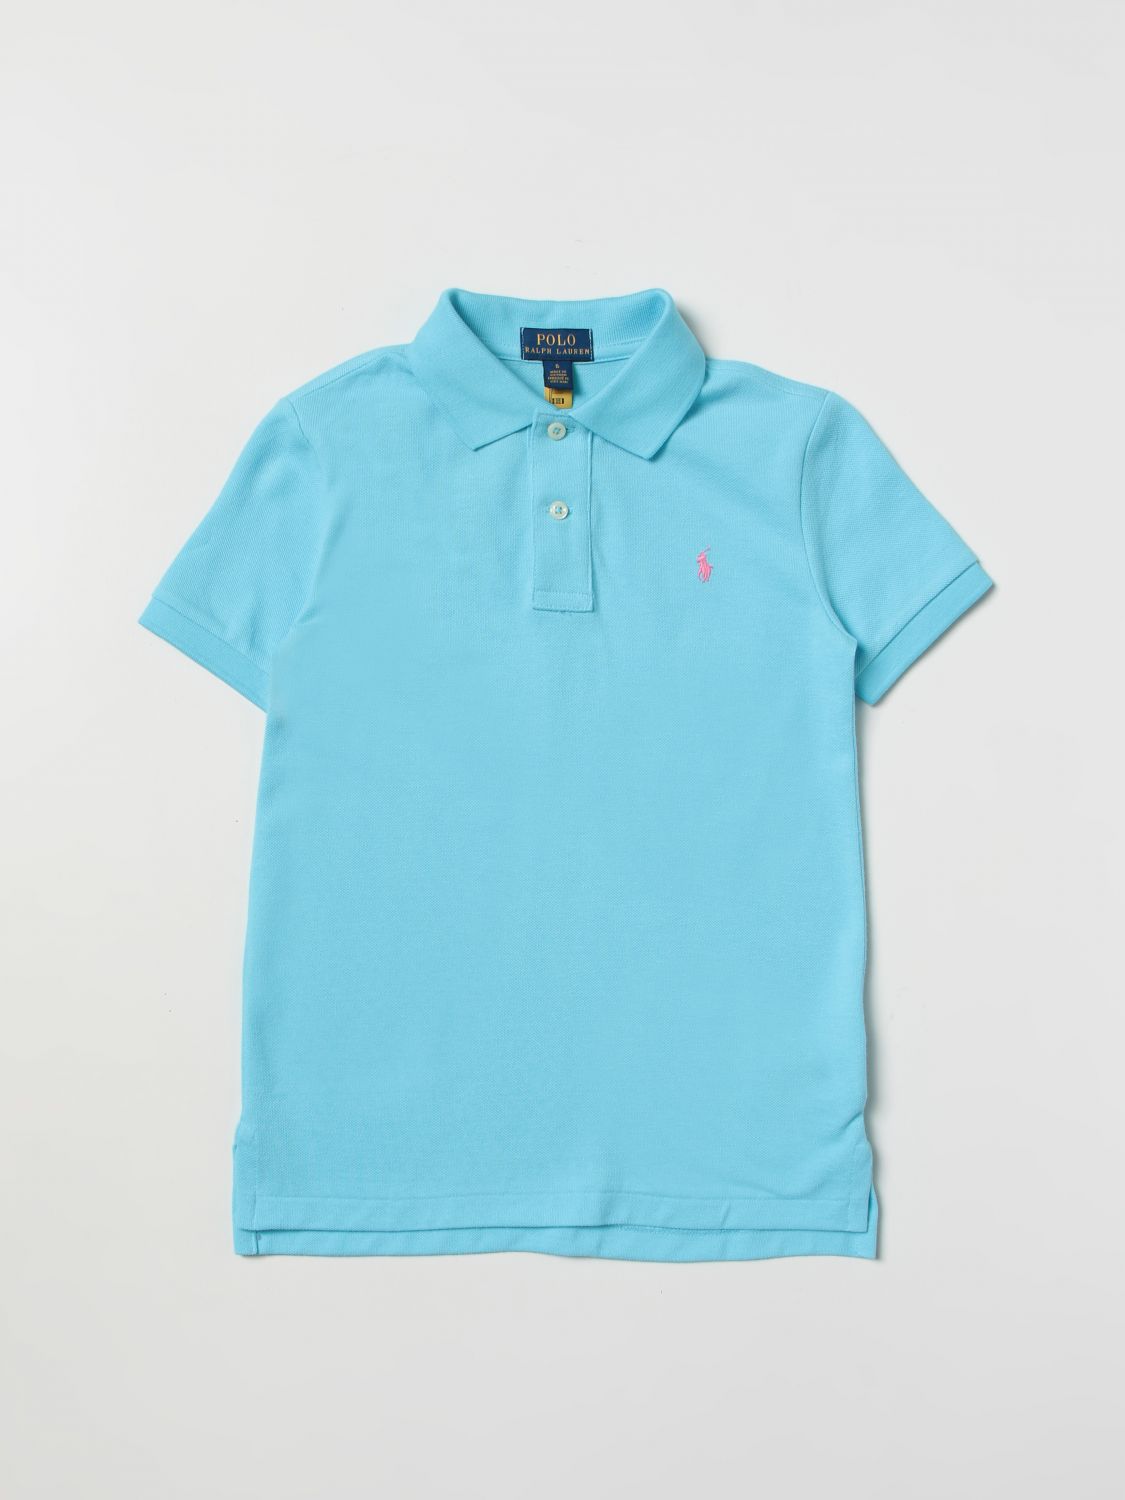 POLO RALPH LAUREN: polo shirt for boys - Turquoise | Polo Ralph Lauren ...